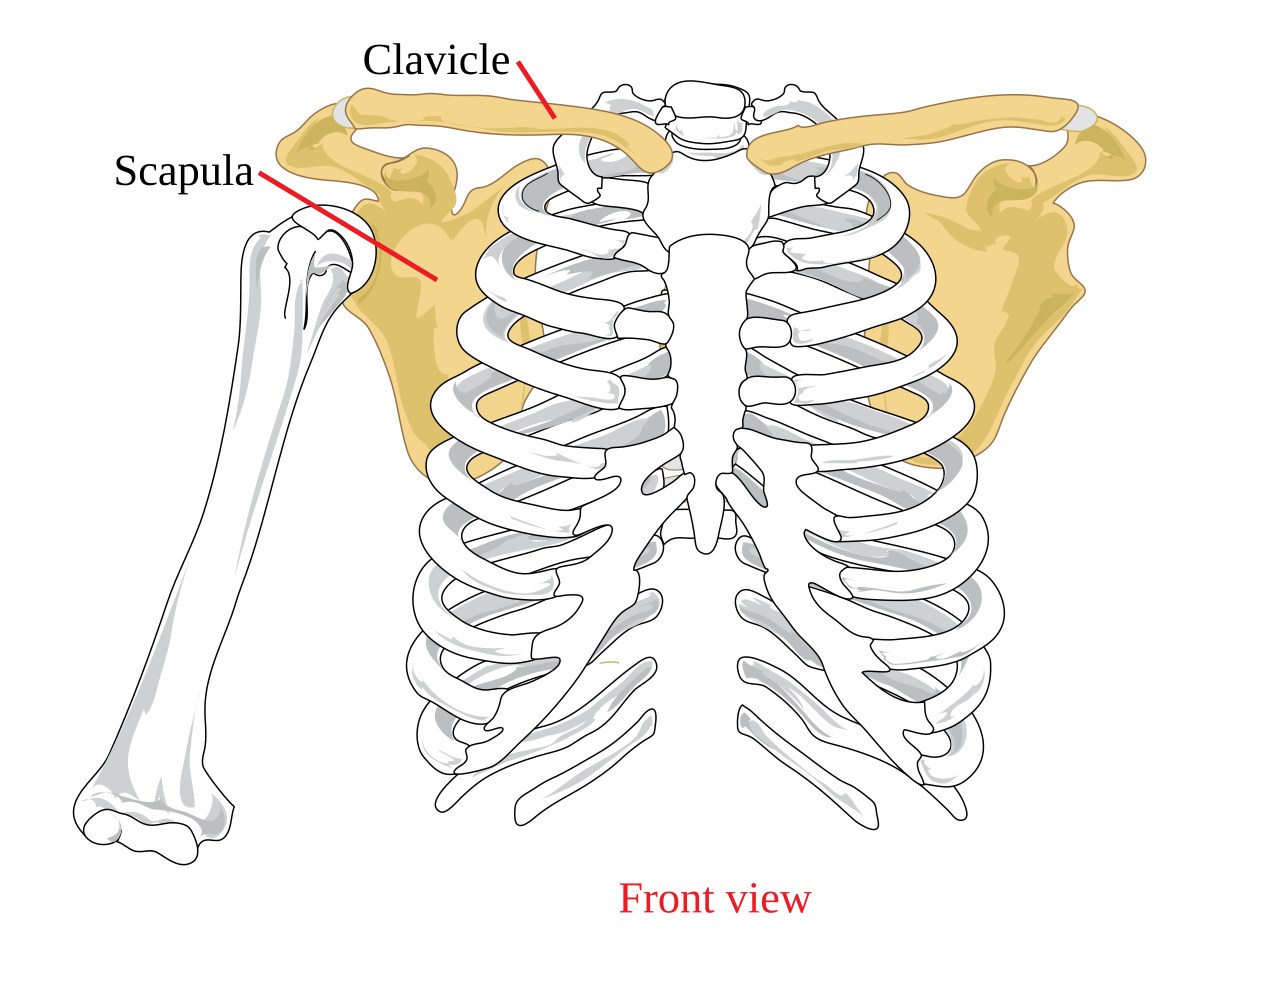 File:Pectoral girdle front diagram ko.svg - Wikipedia